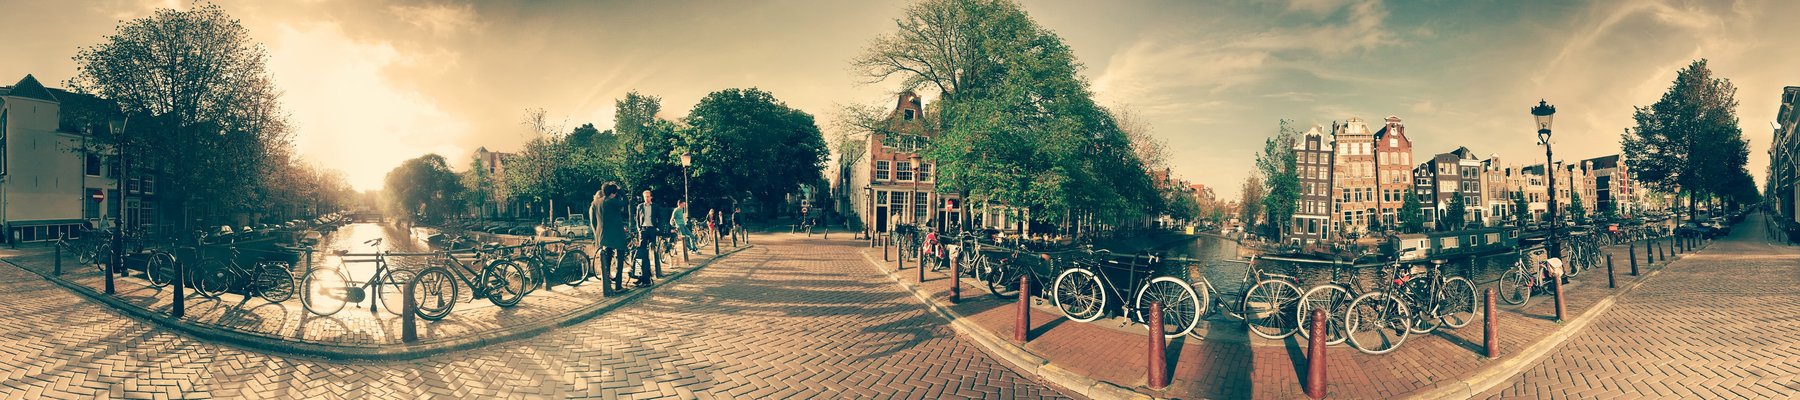 Sepiatonned Amsterdam street